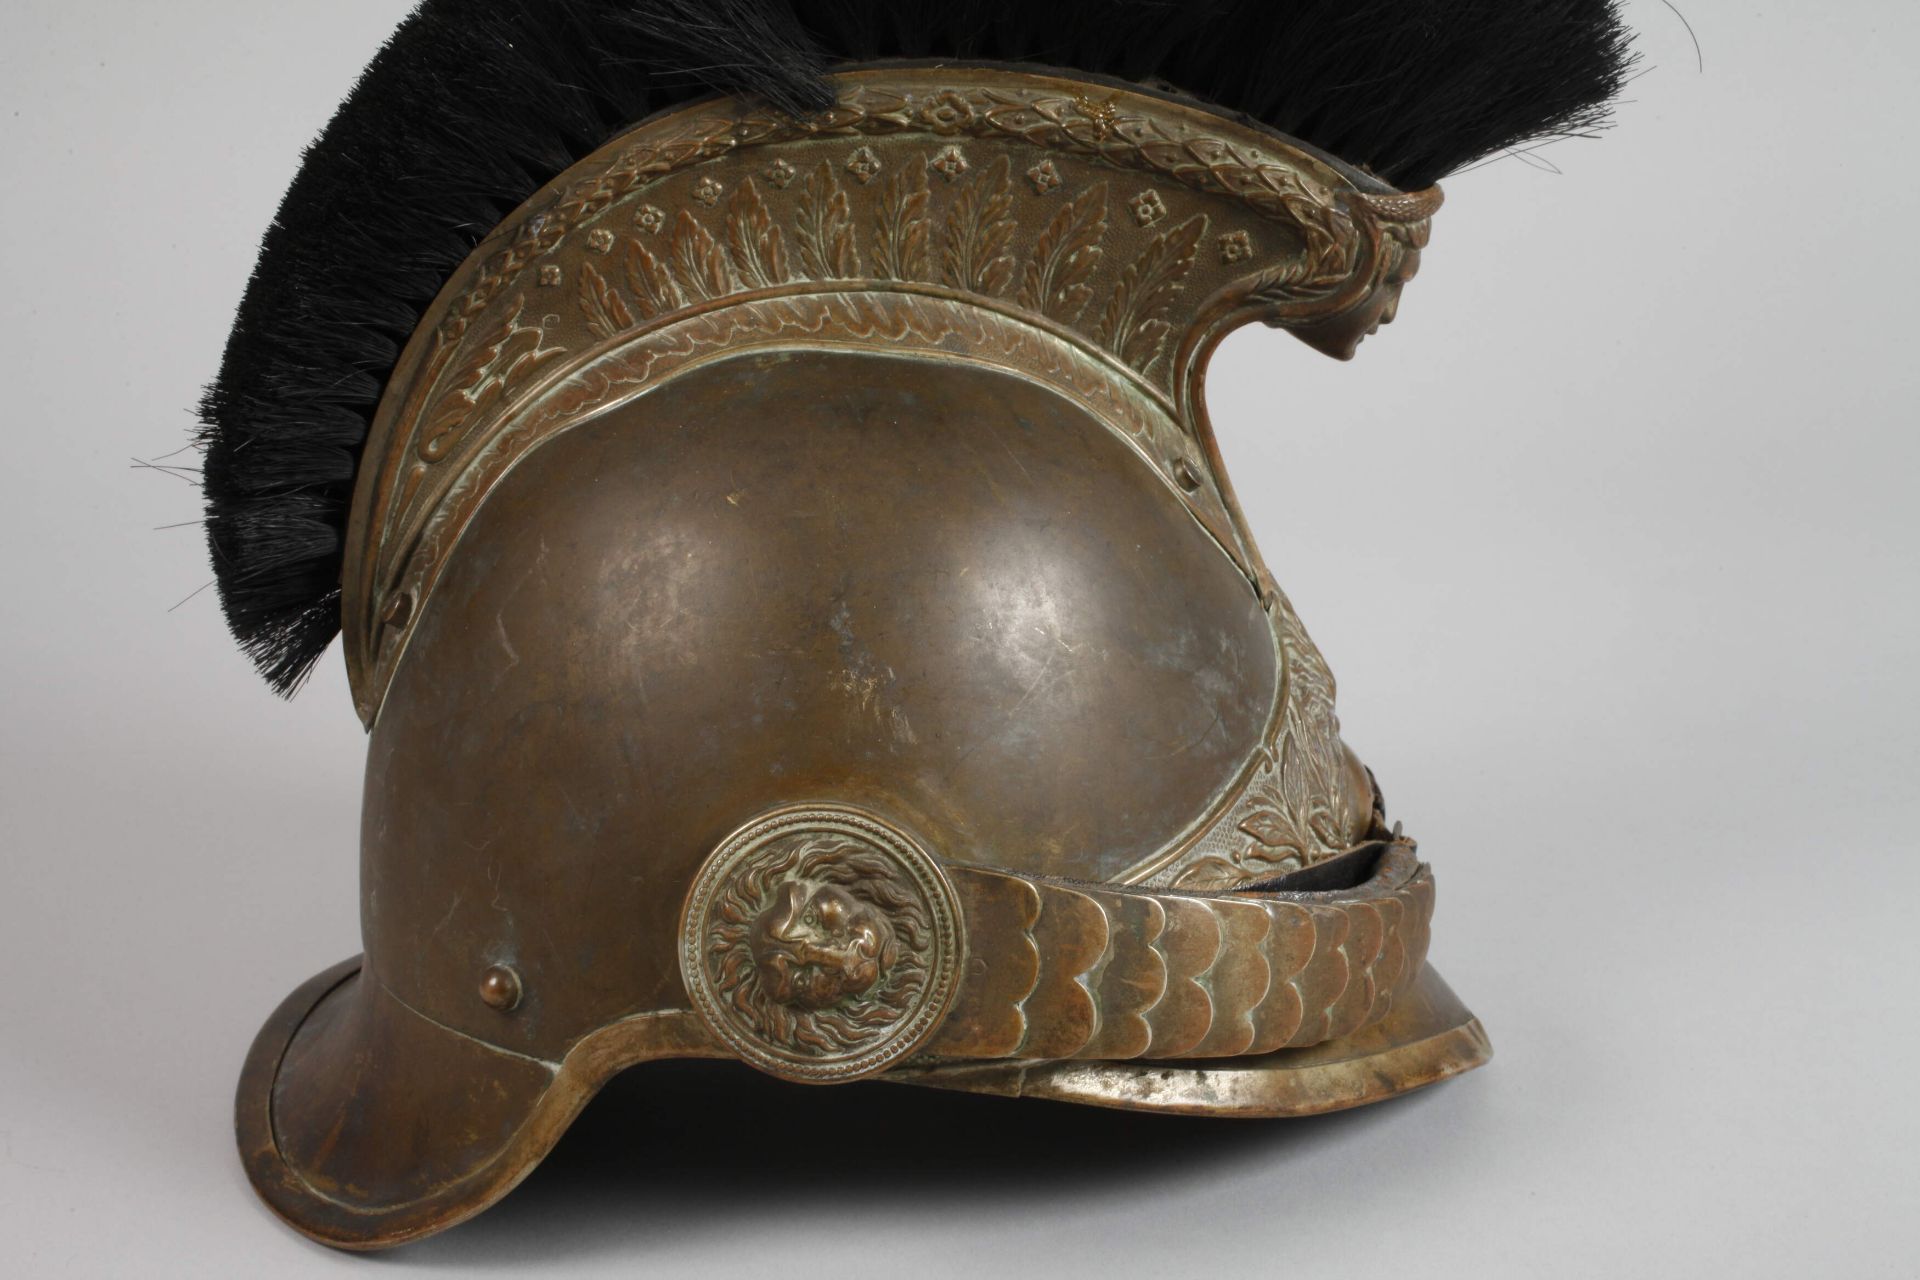 Gendarmerie helmet France - Image 4 of 6